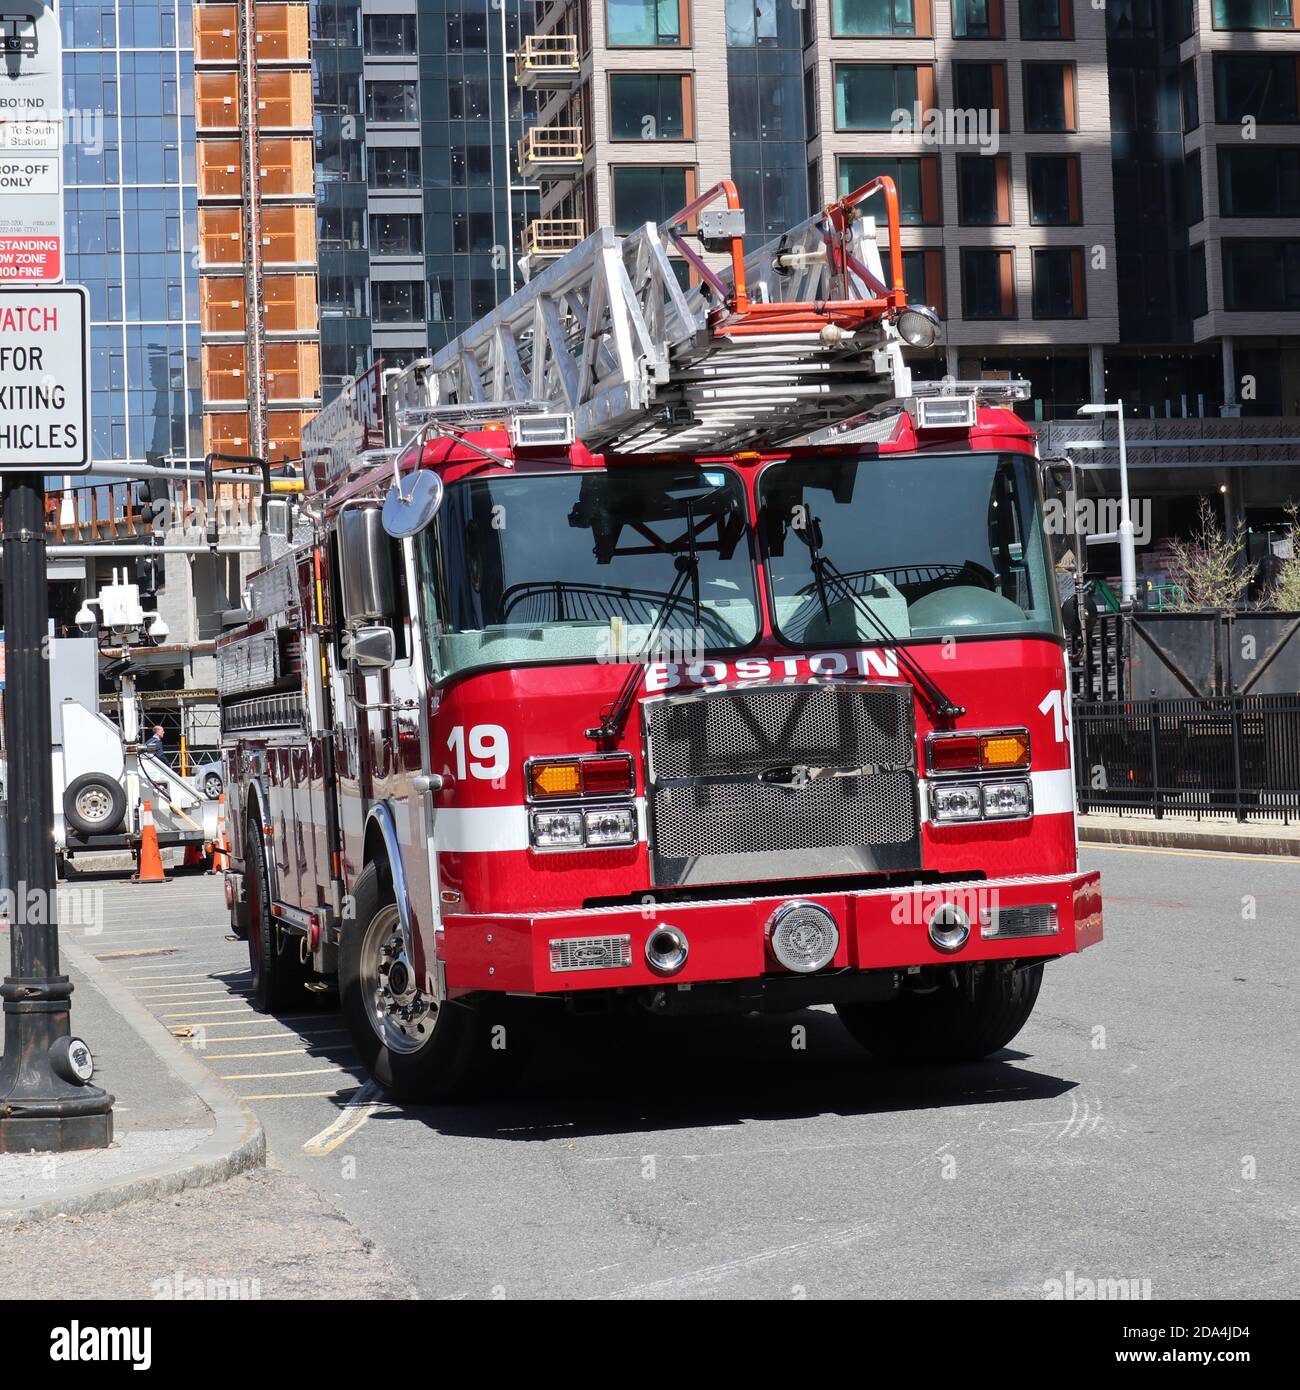 Boston Fire Ladder 19 Stock Photo